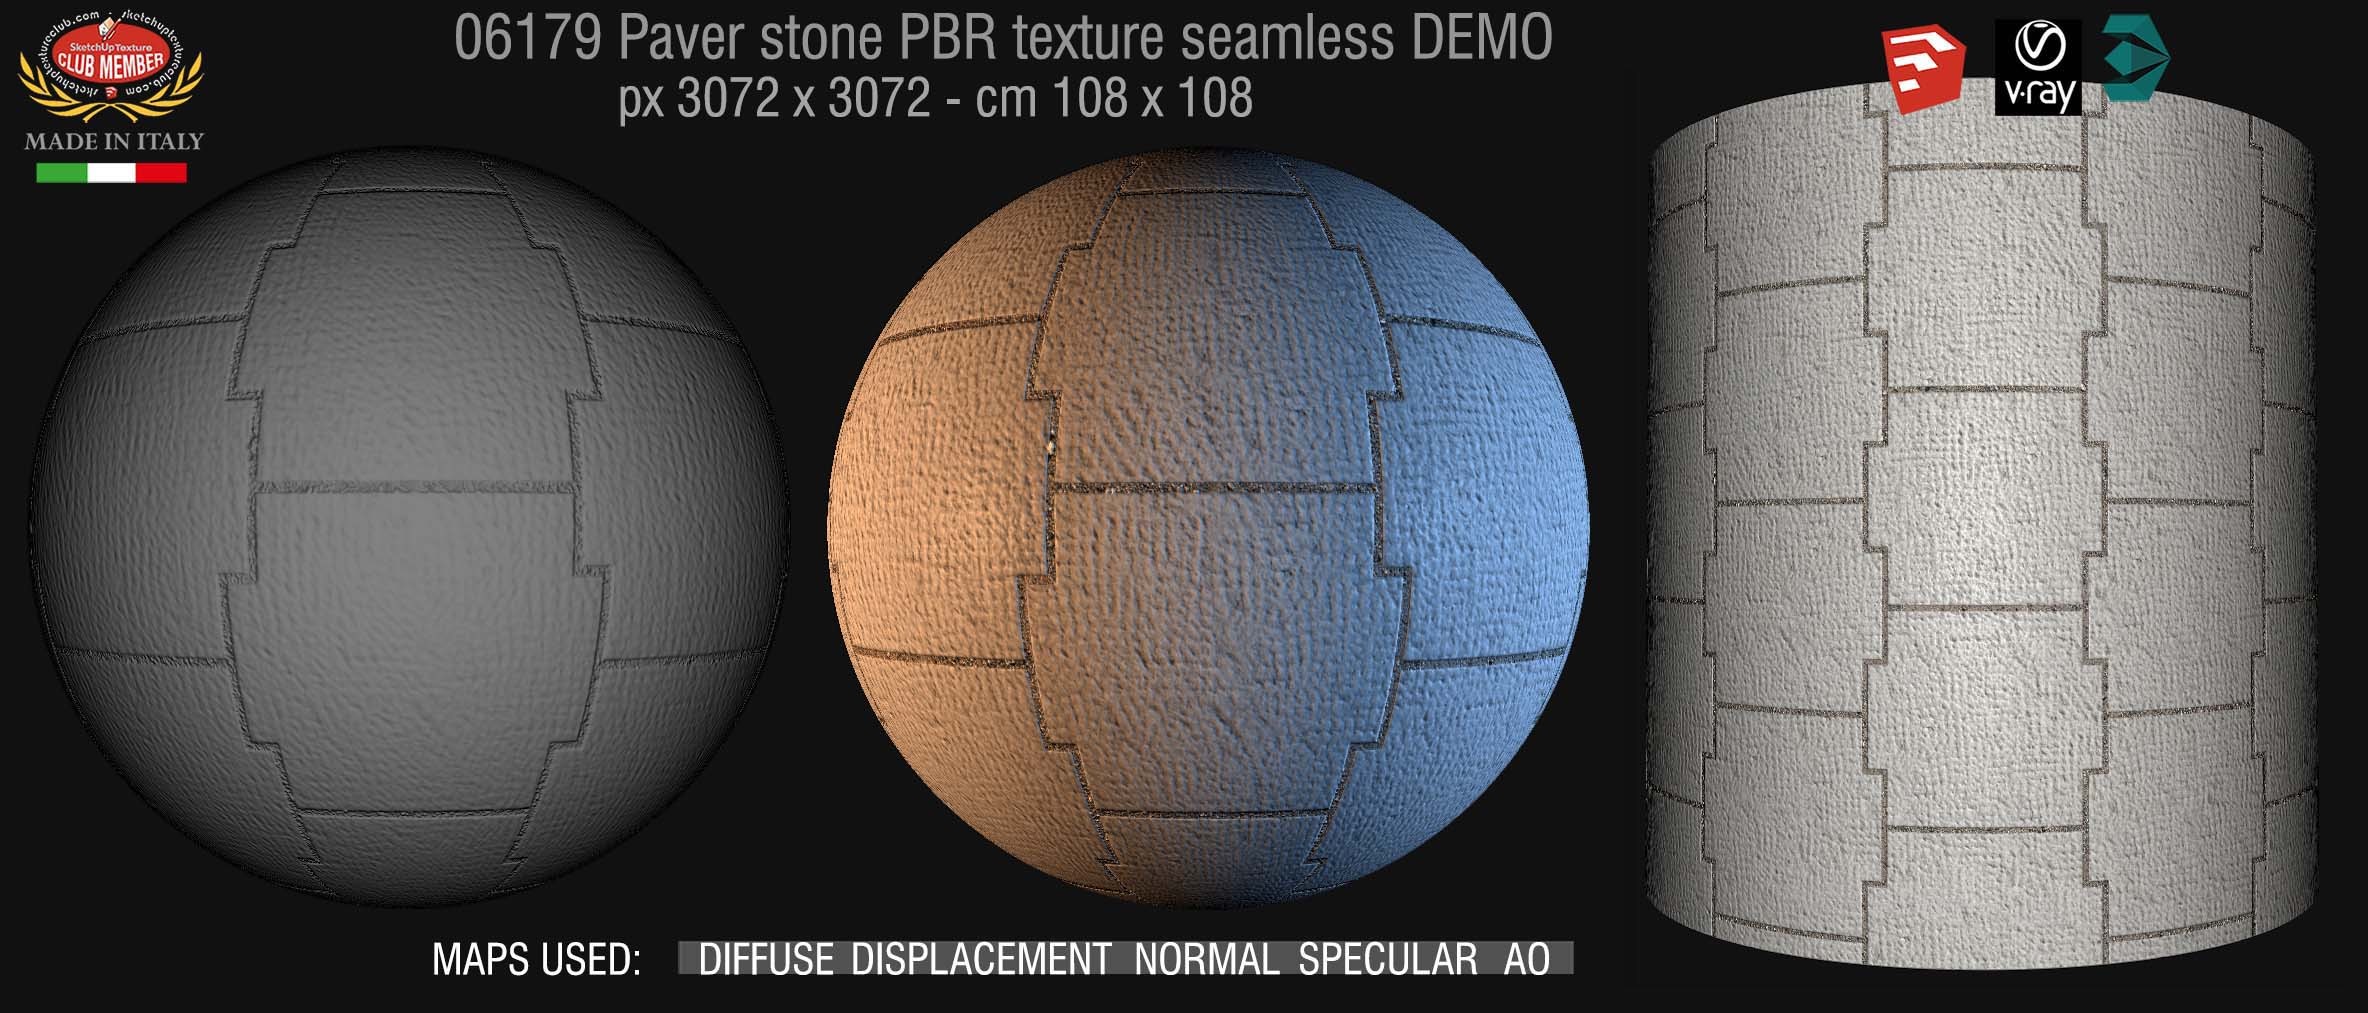 06179 paver stone PBR texture seamless DEMO